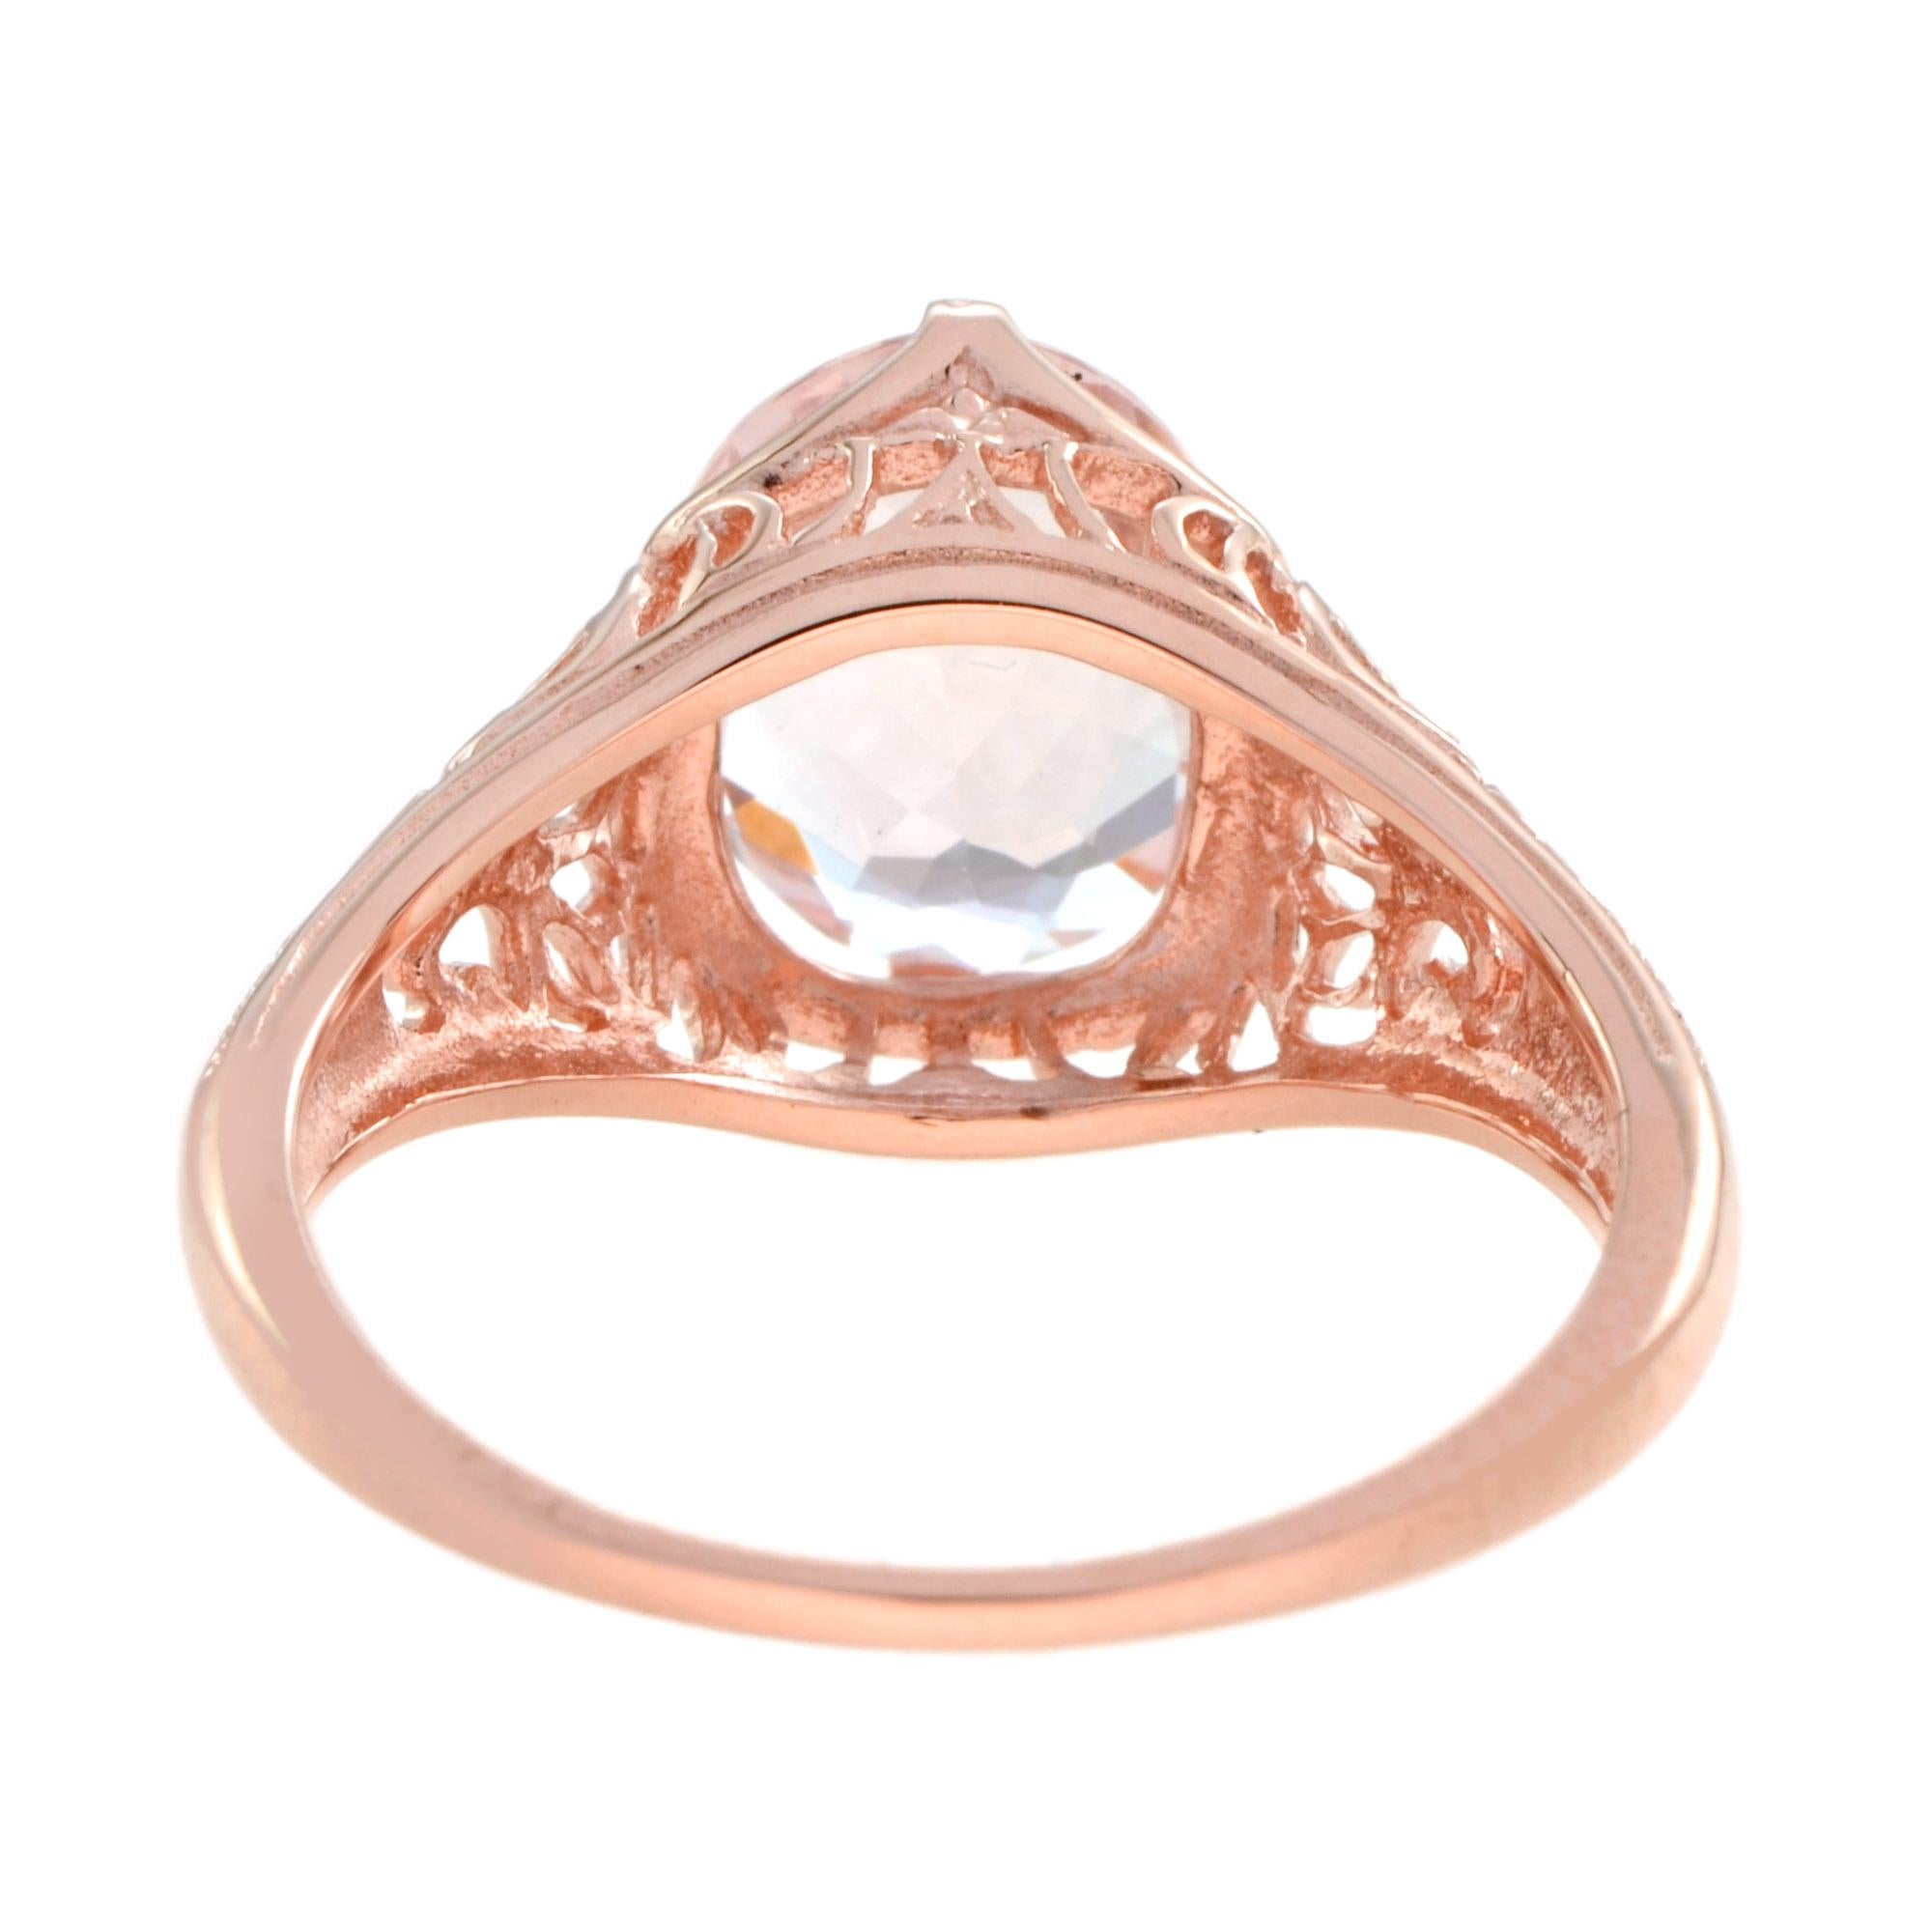 Art Deco Oval Shaped Morganite Vintage Style Filigree Engagement Ring in 9k Rose Gold For Sale